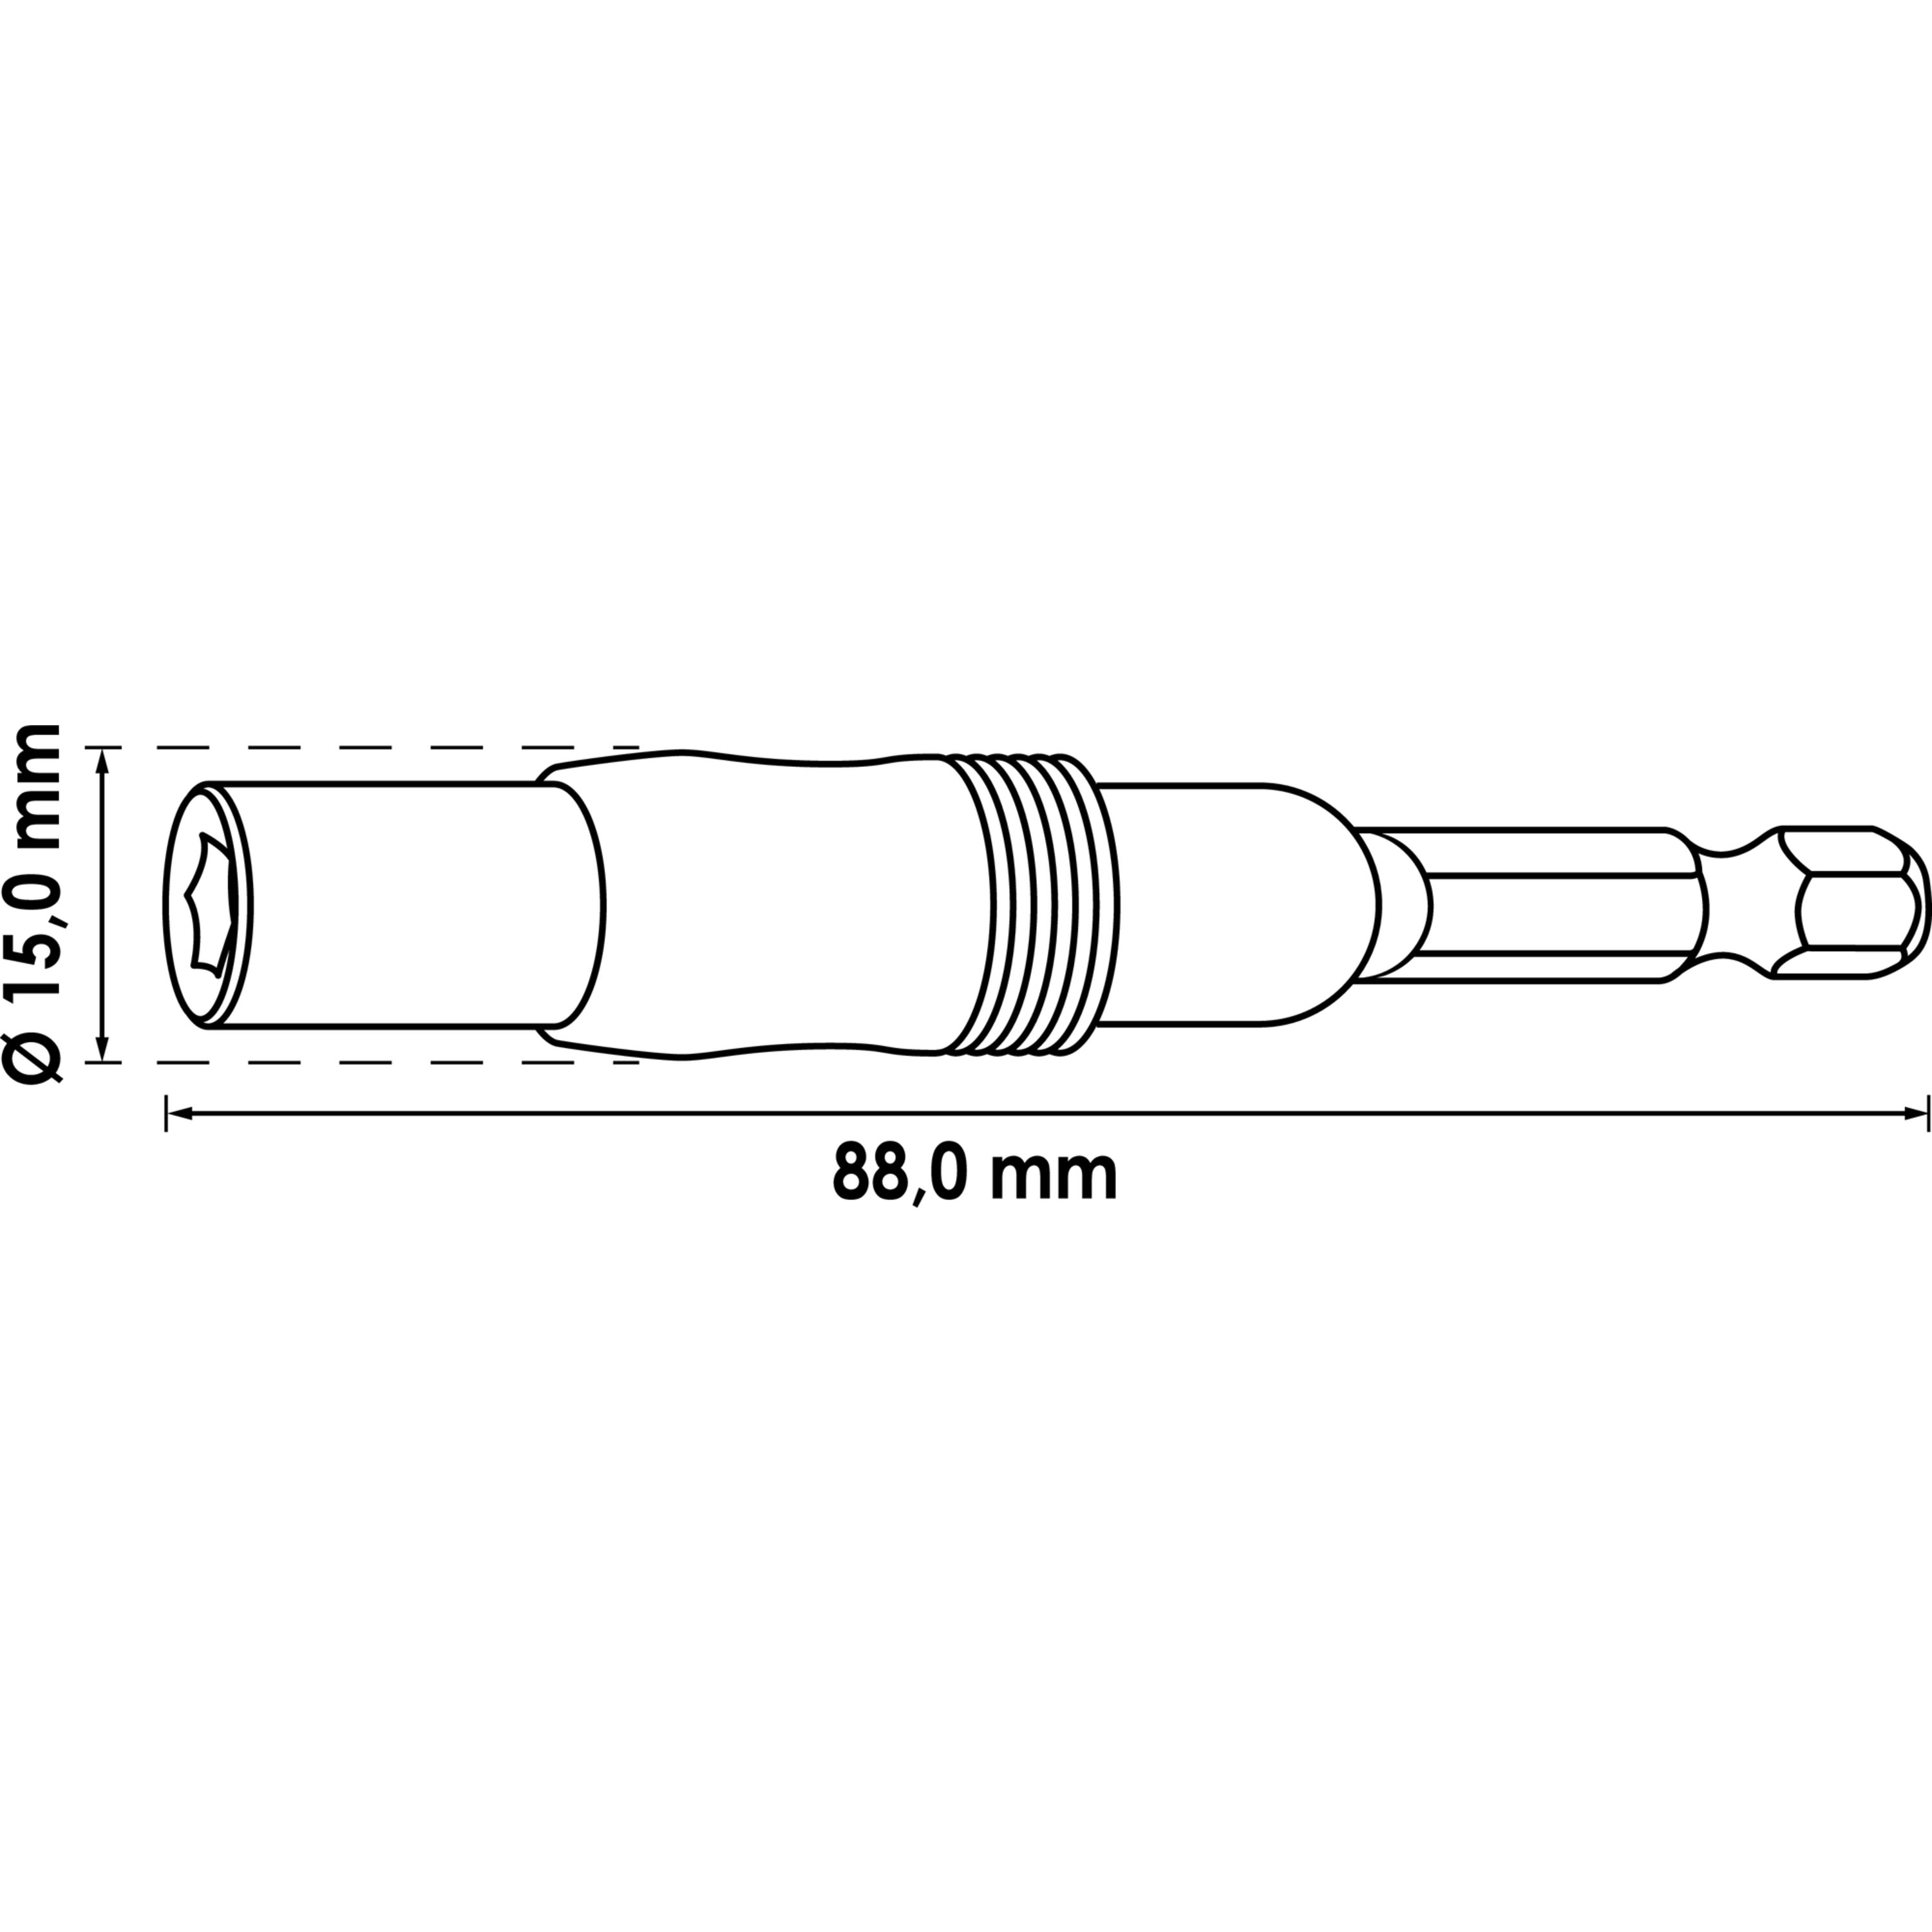 Bit holder with articulated joint, Schraubendreher